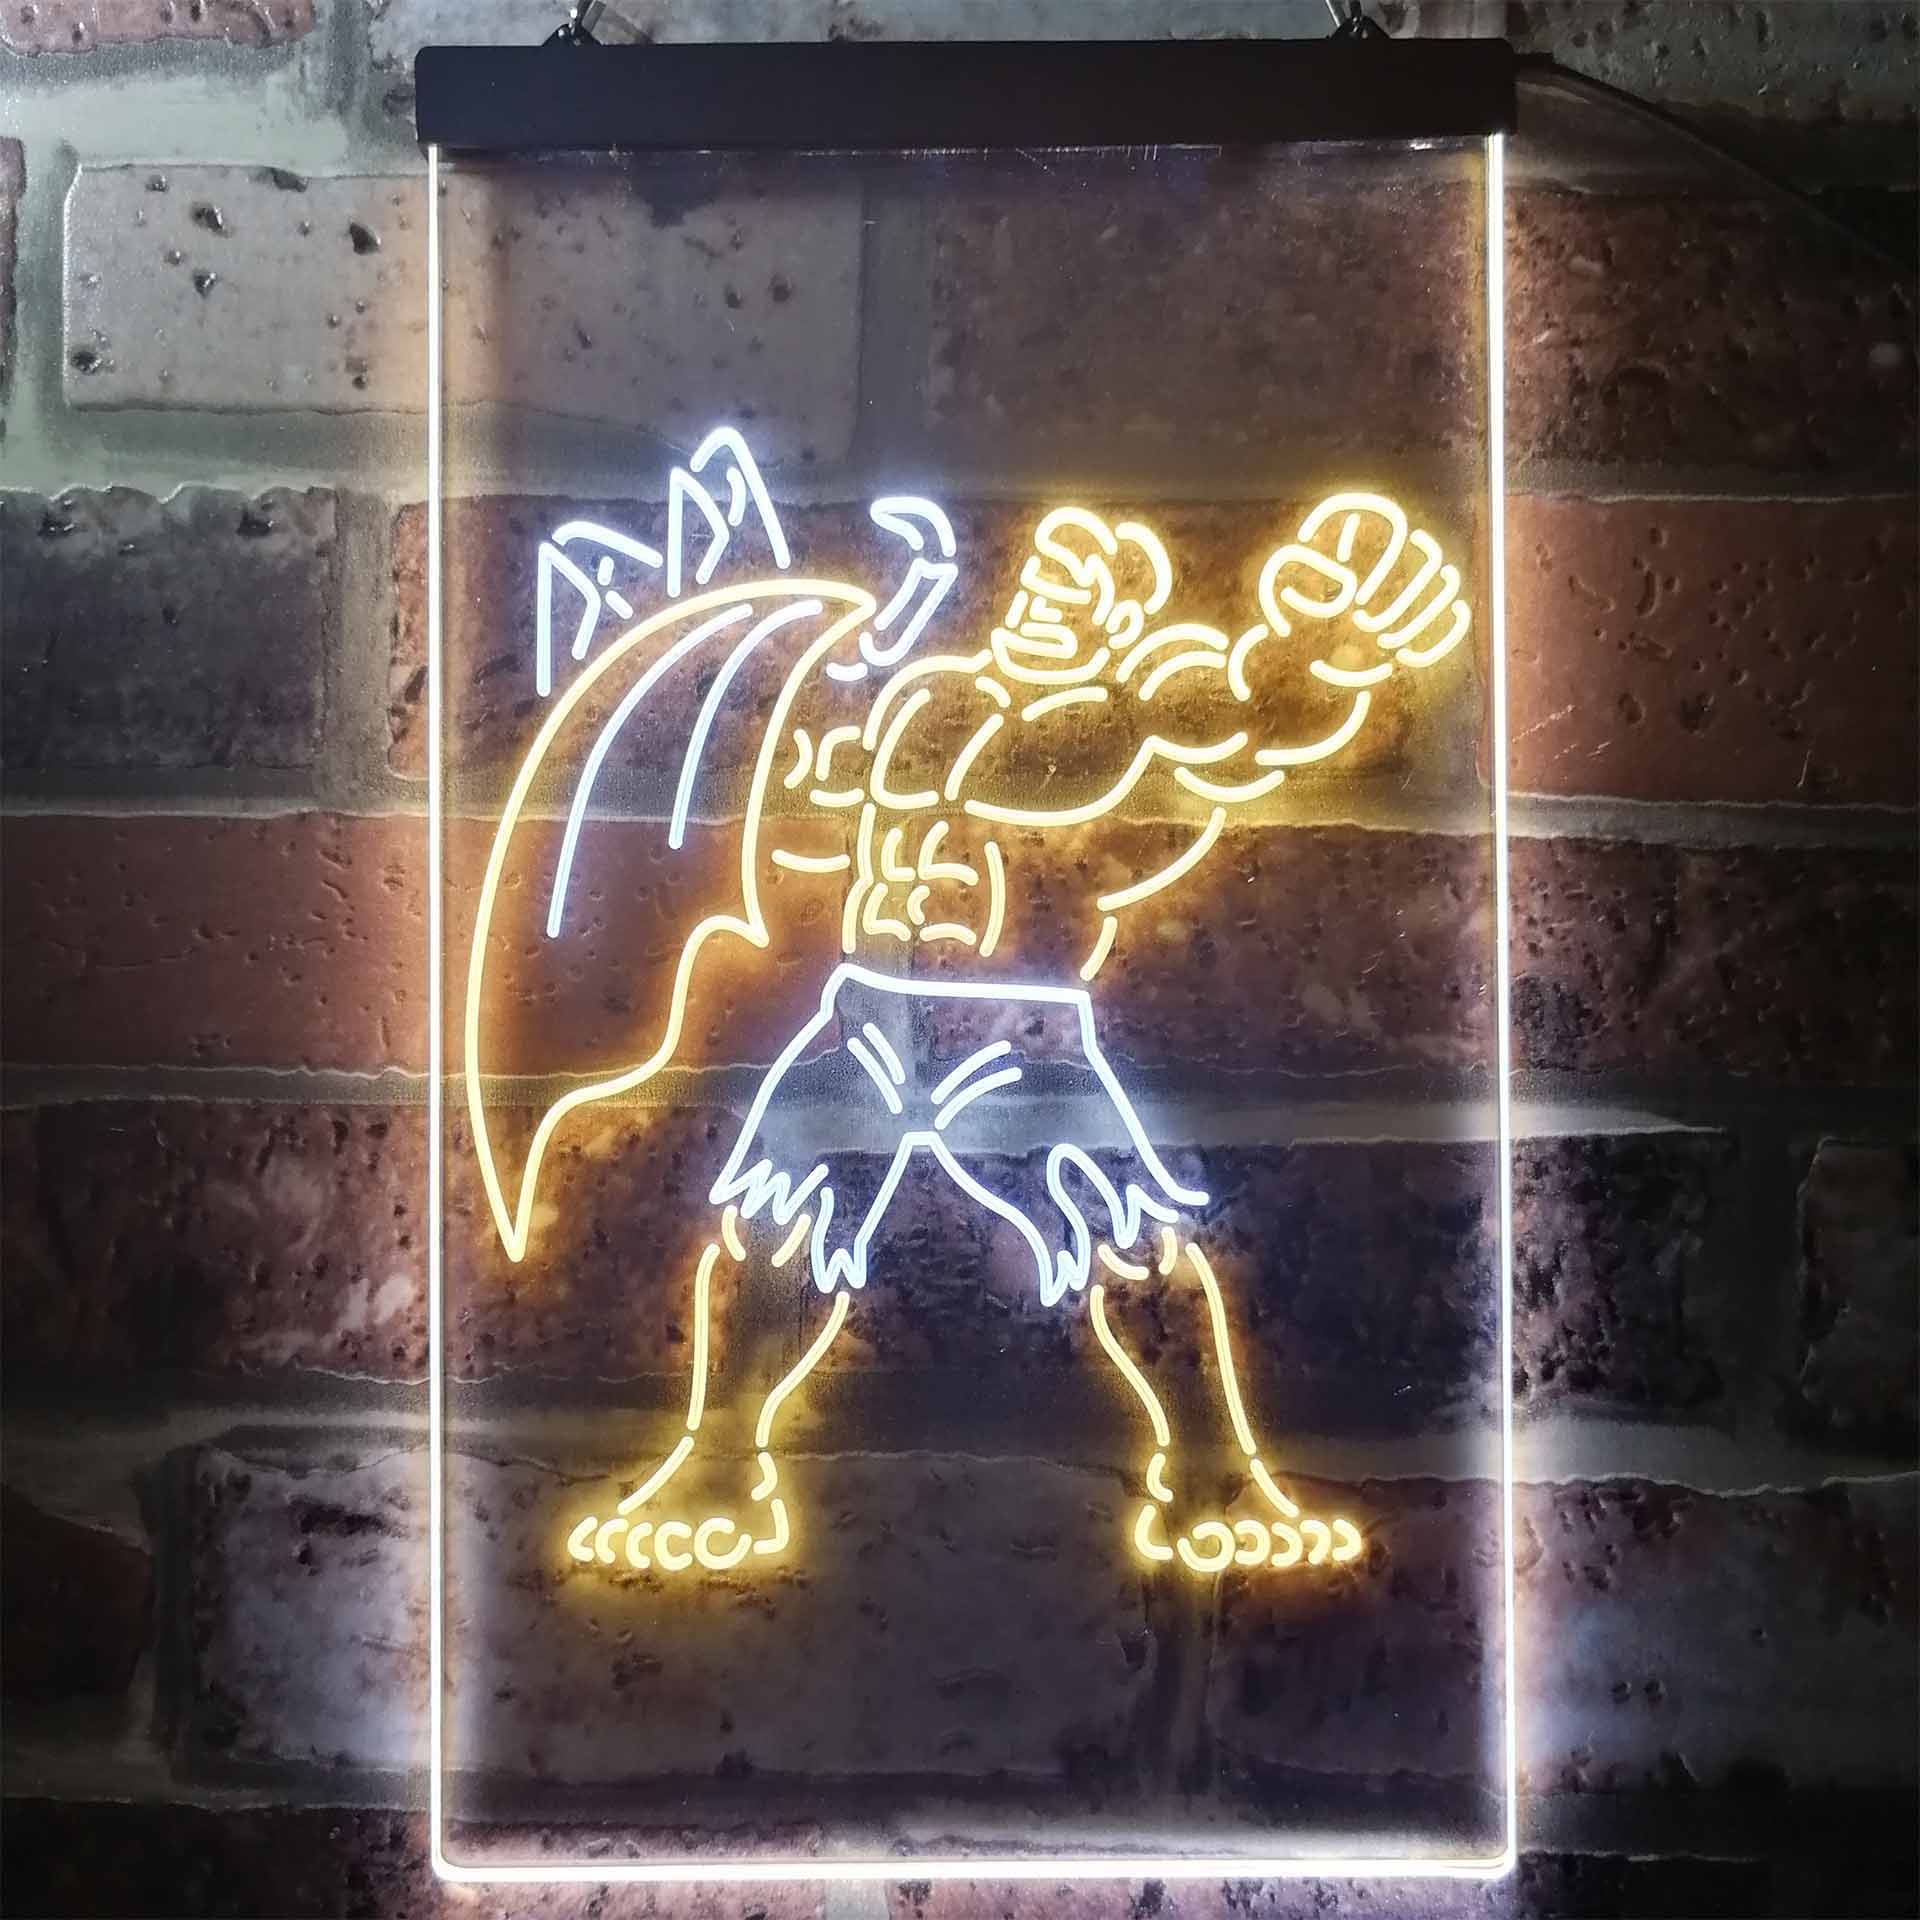 The Incredible Hulk LED Neon Sign